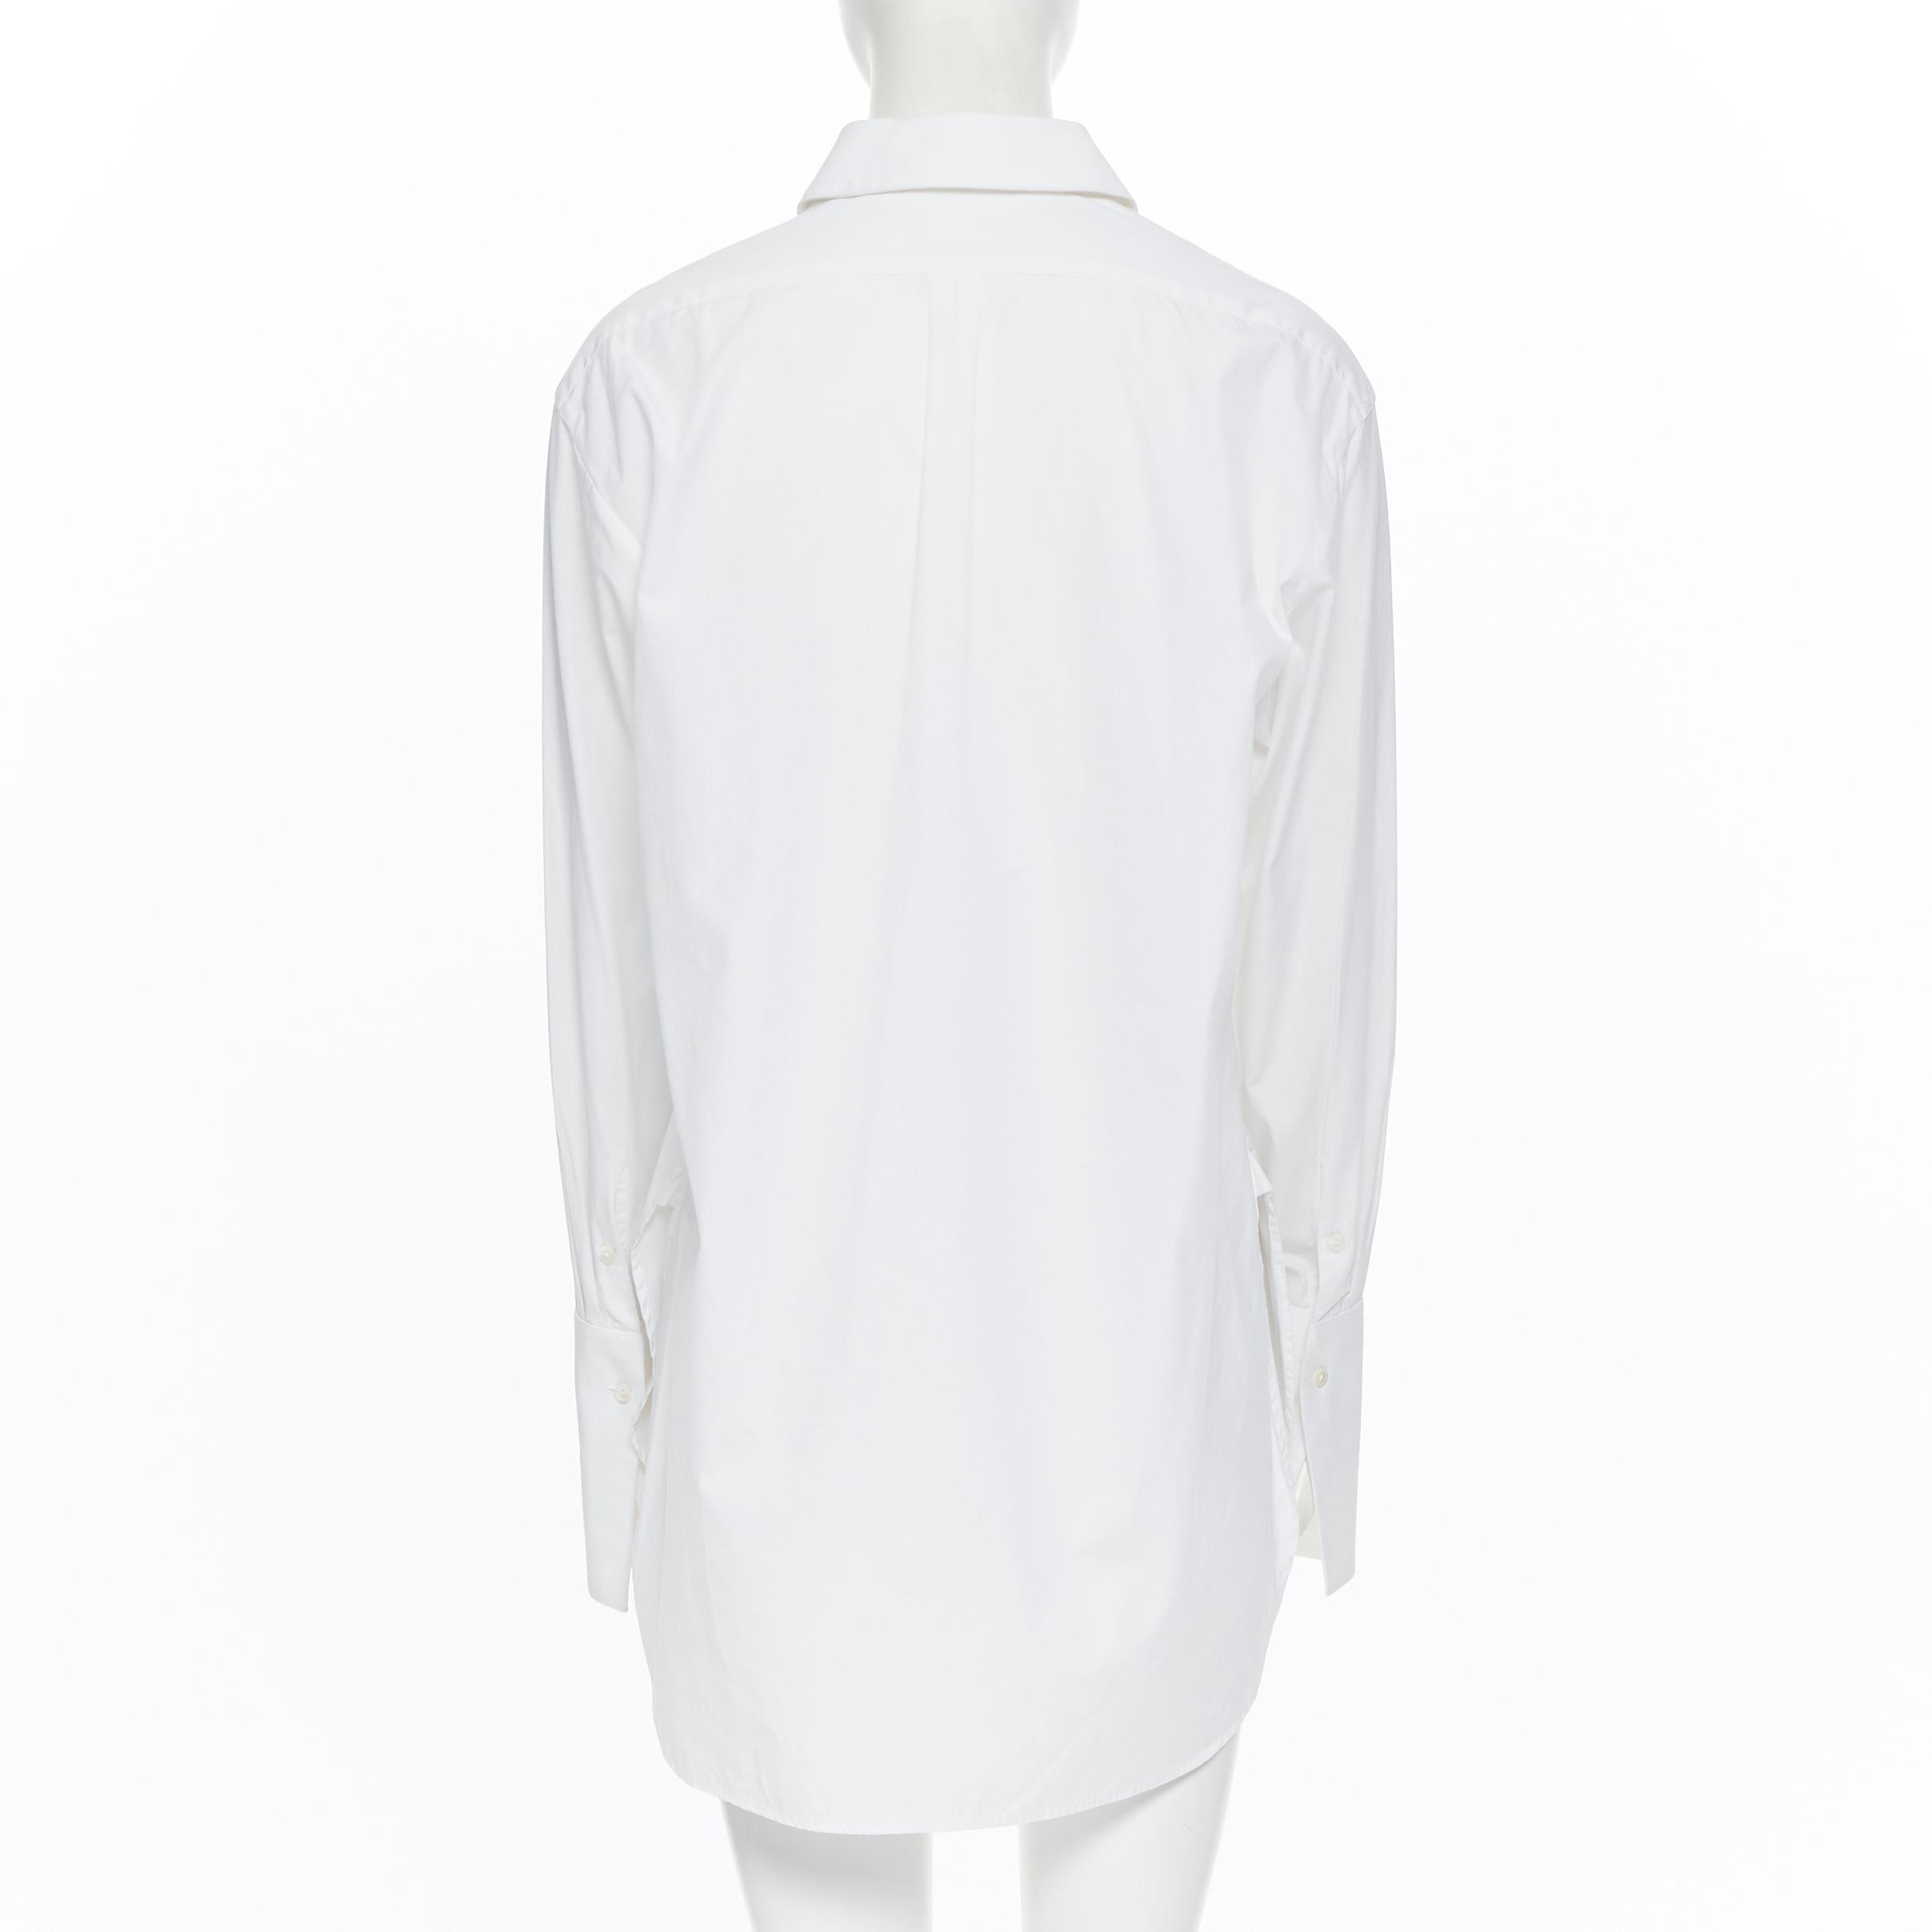 PALMER HARDING white cotton elongated cuff curvec hem oversized shirt UK8 1